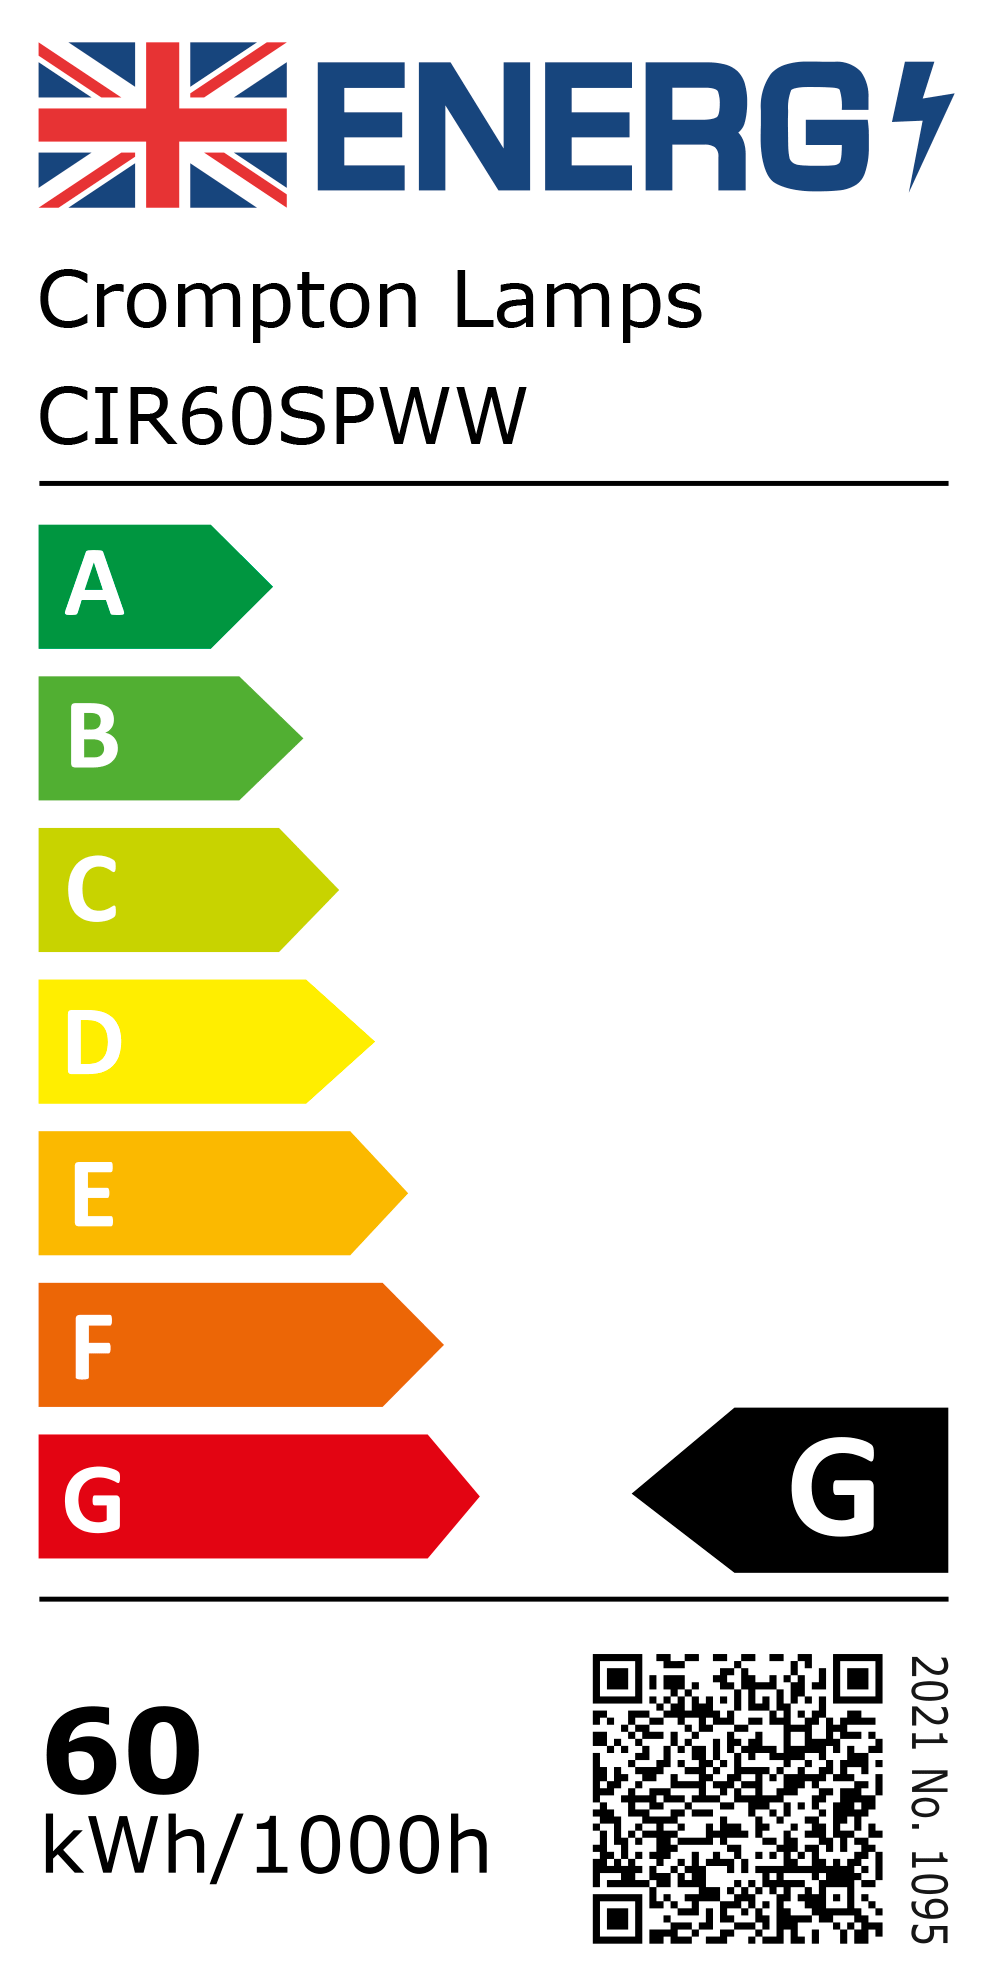 New 2021 Energy Rating Label: MPN CIR60SPWW